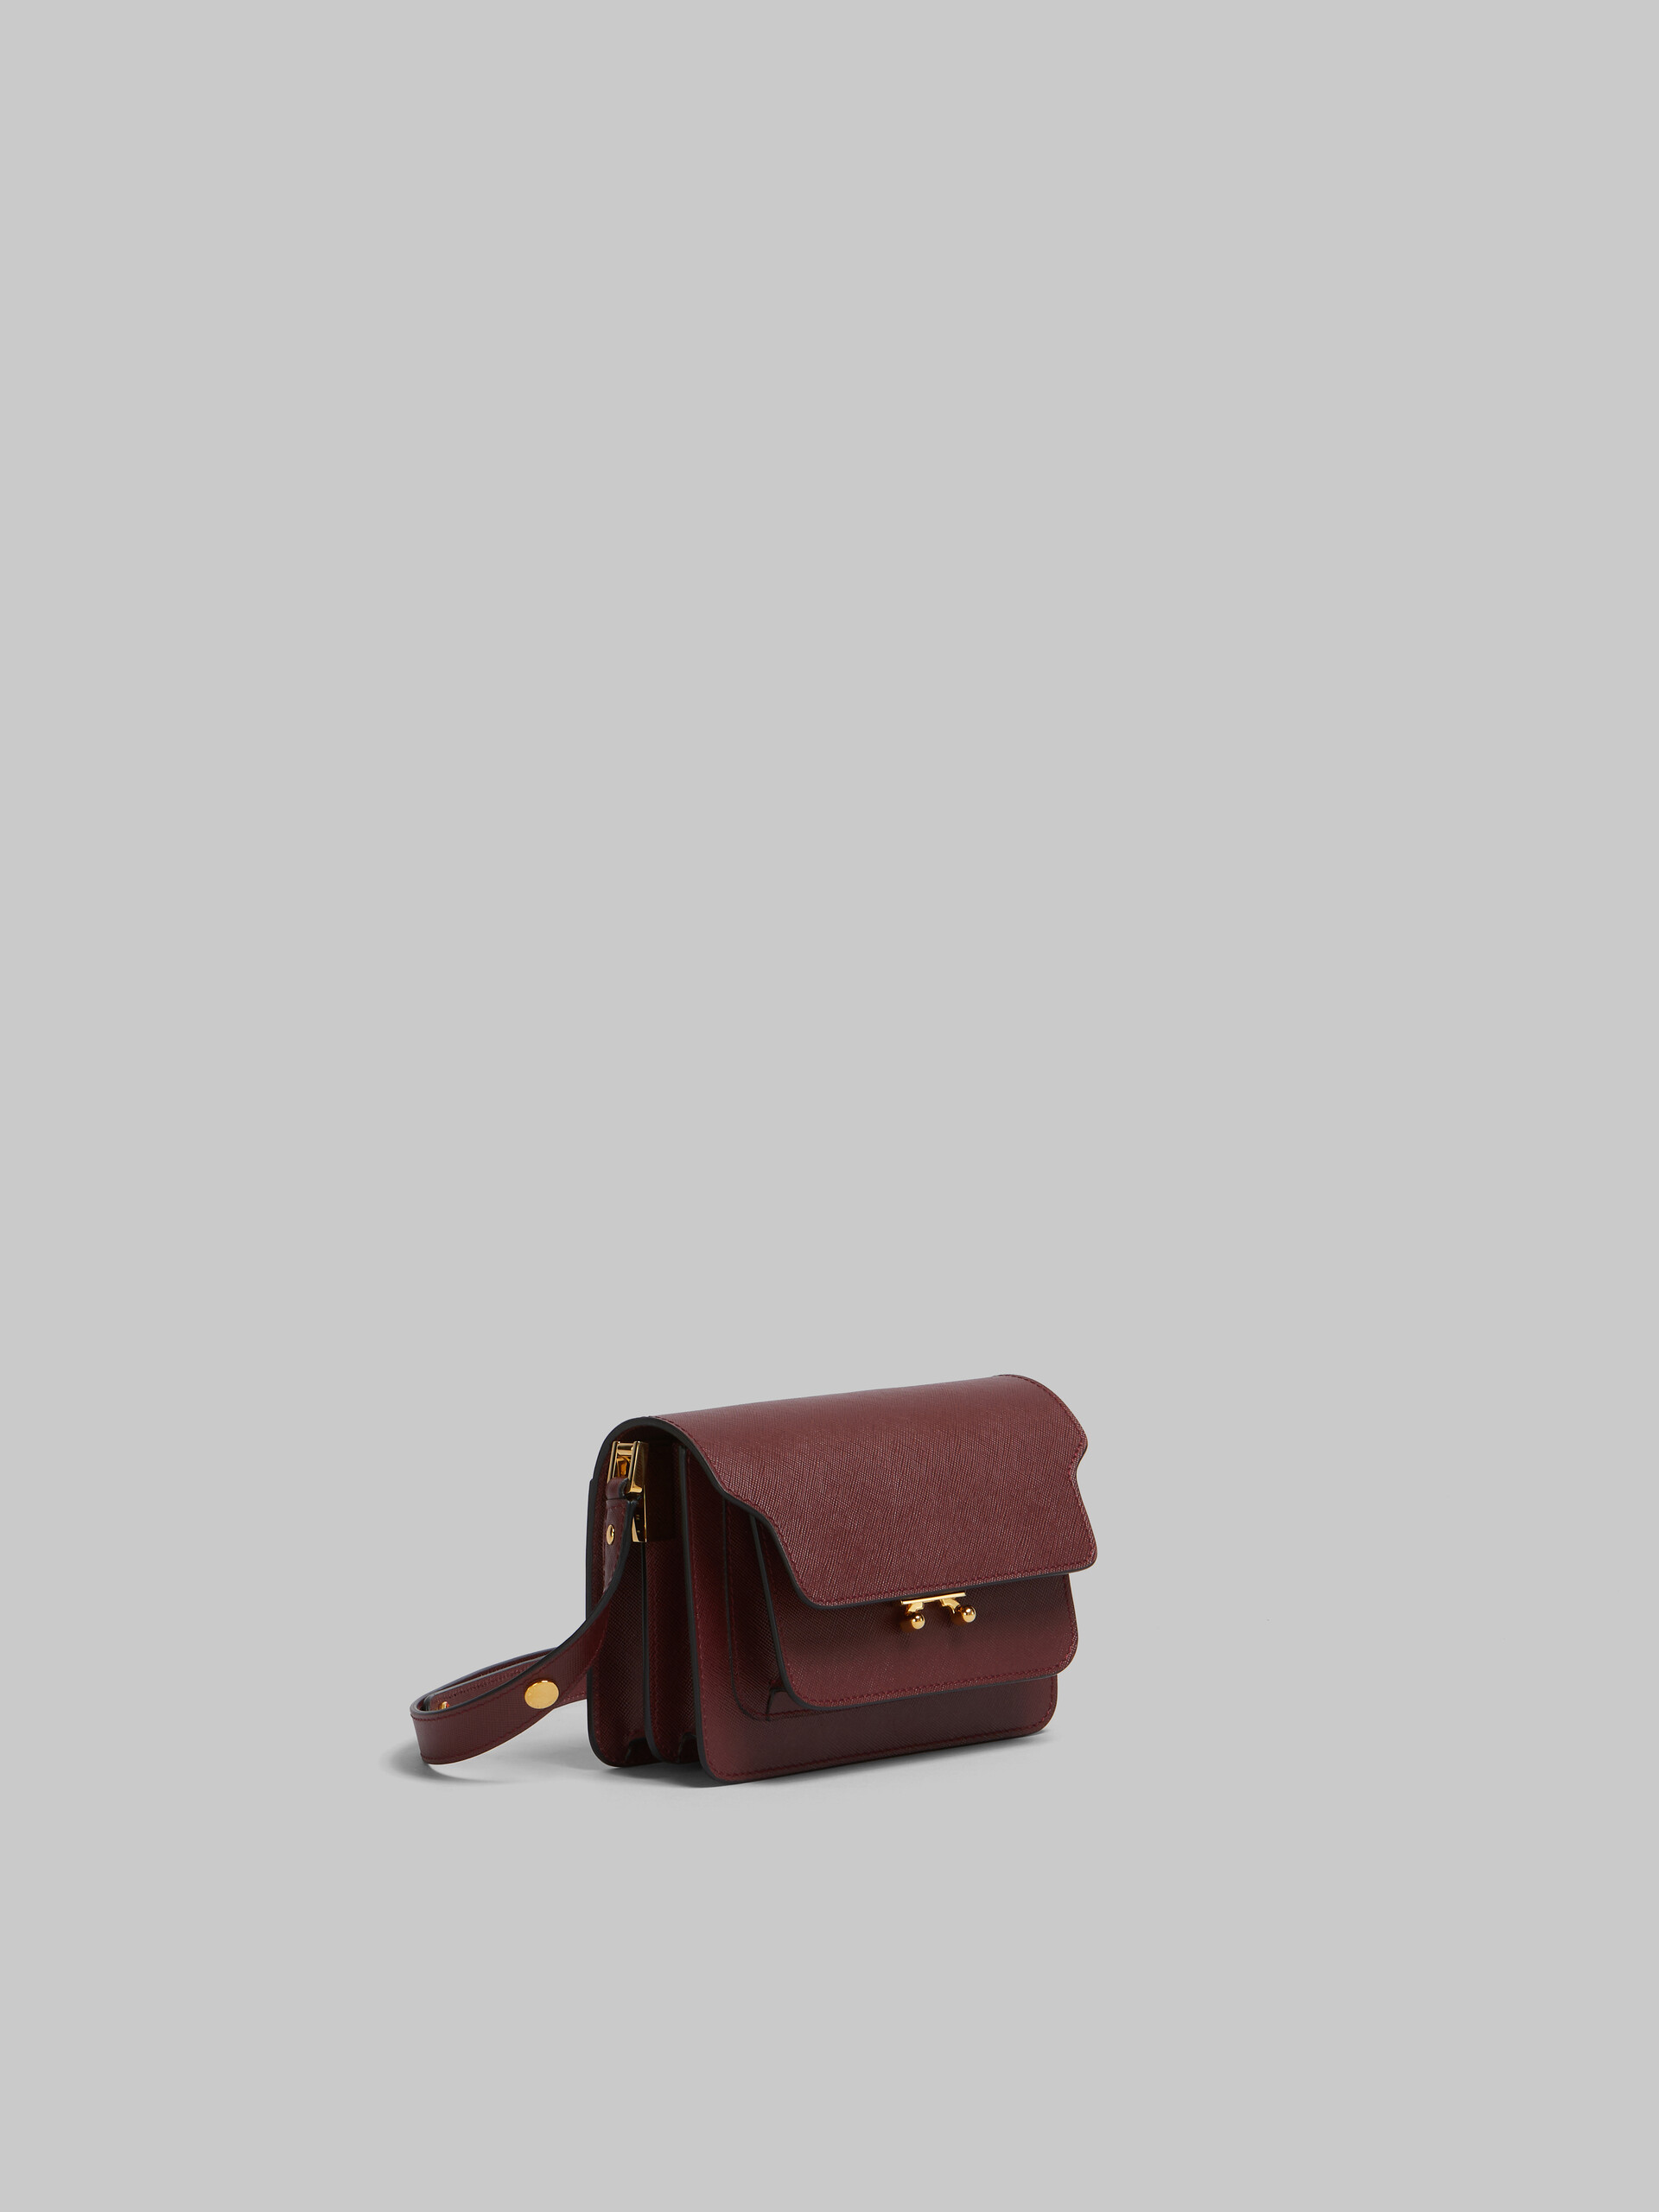 Mini sac Trunk en cuir Saffiano marron - Sacs portés épaule - Image 6